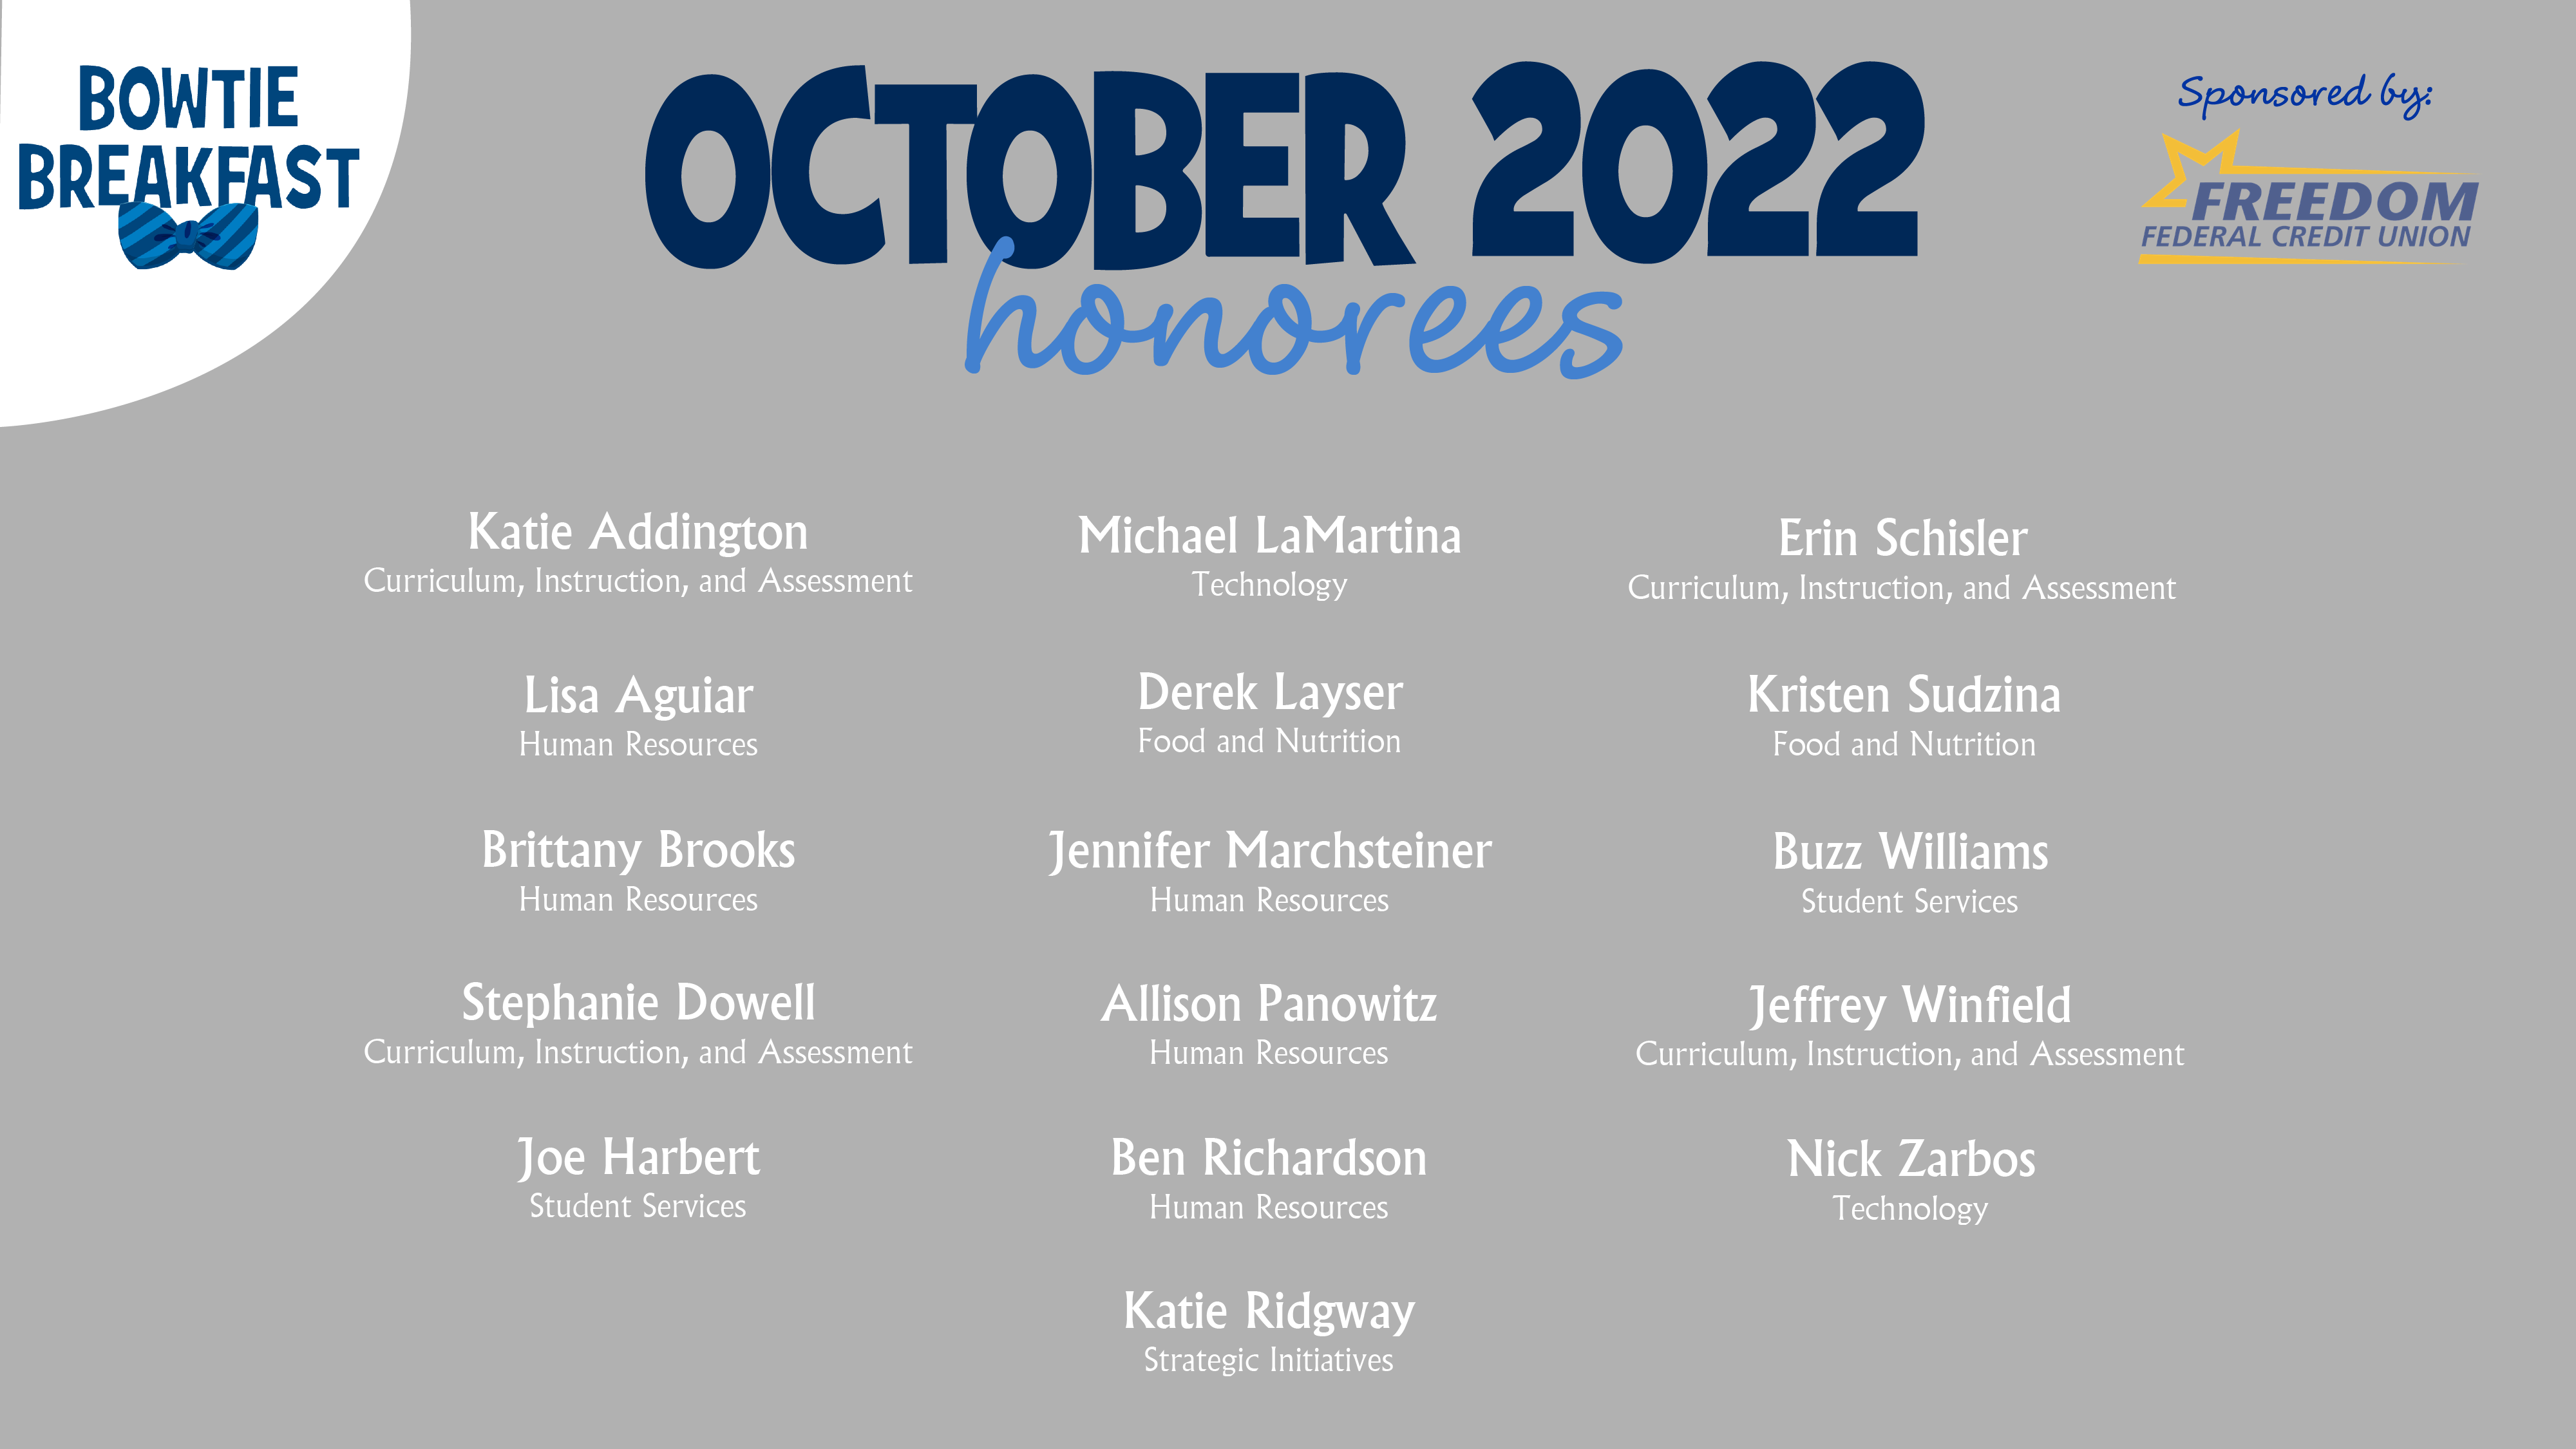 HCPS Bowtie Breakfast Honorees - October 2022